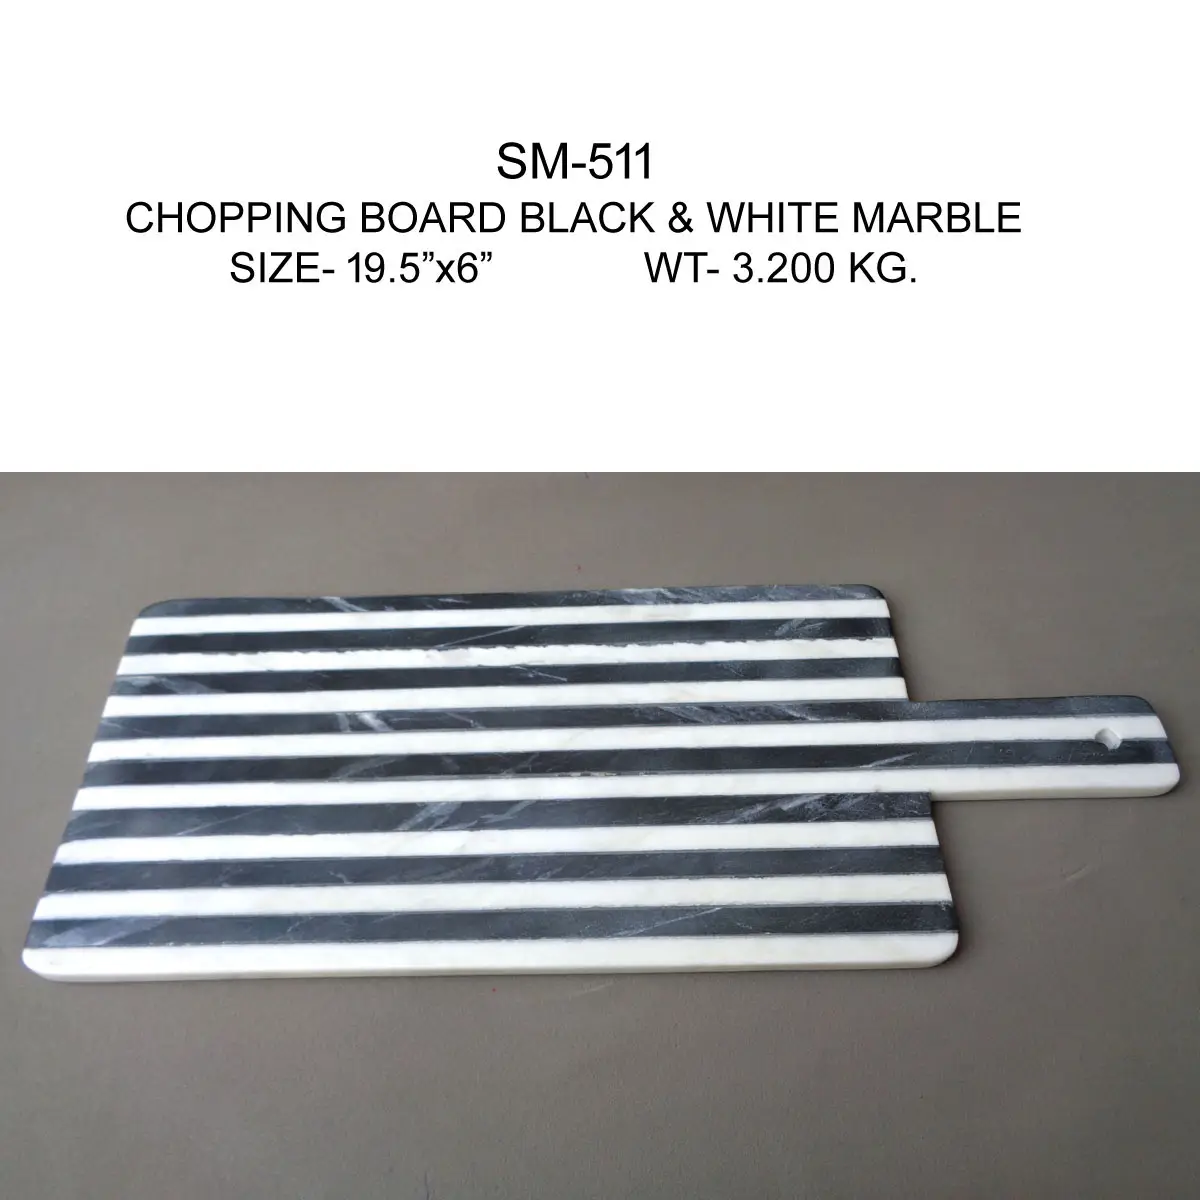 CUTTING BOARD SAMPLE NO. 10 BLACK & WHITE 16
STRIP